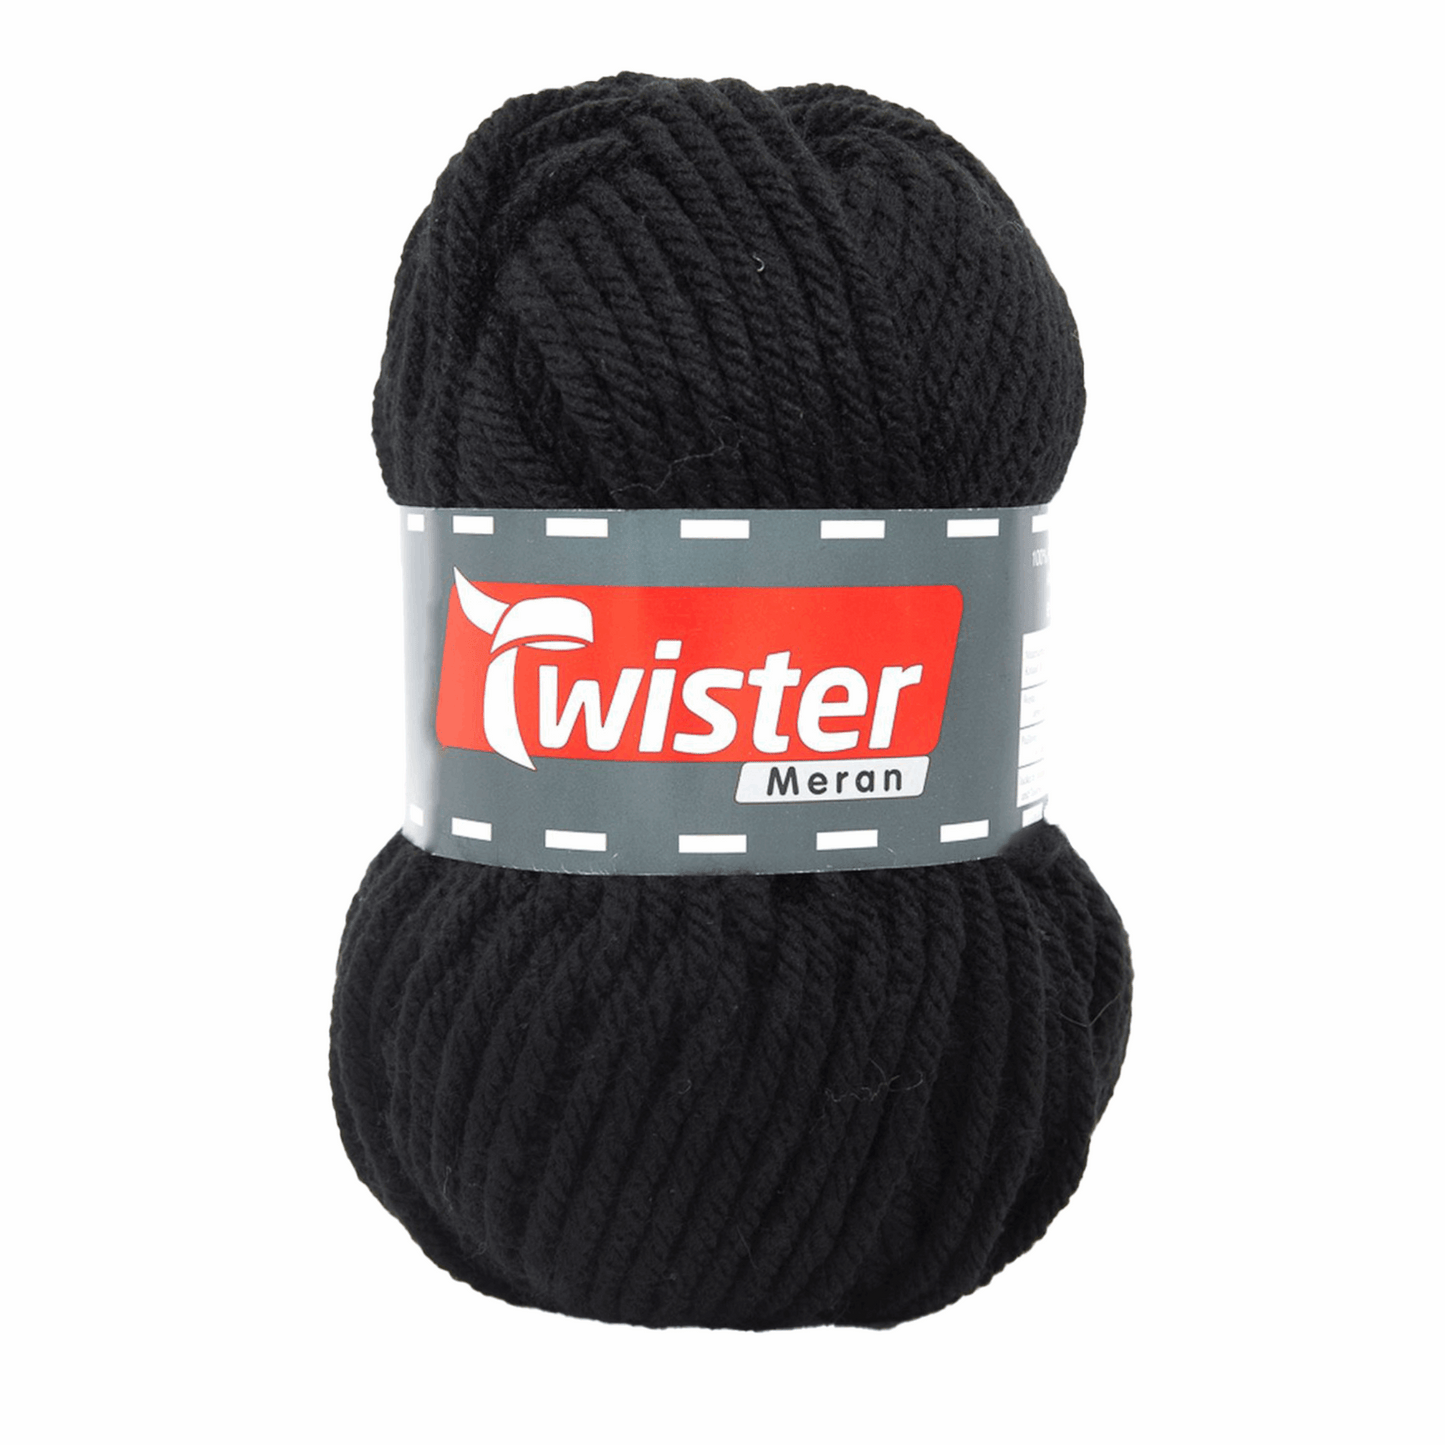 Twister Meran 100g, 98534, color black 90